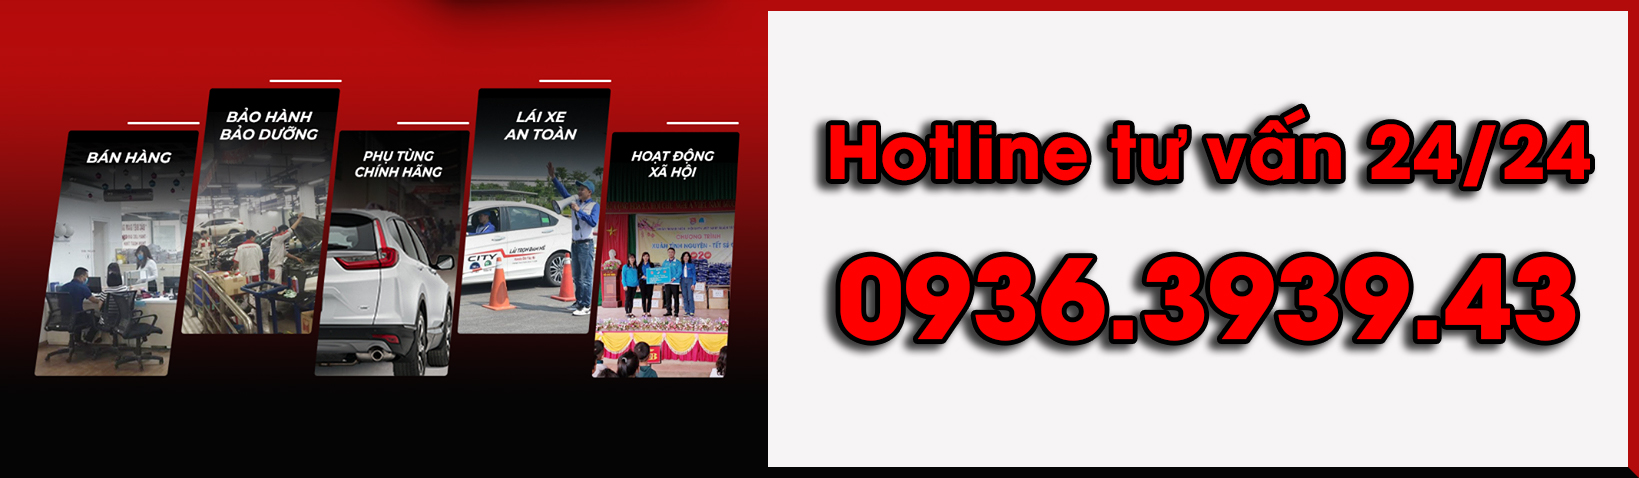 banner_hotline